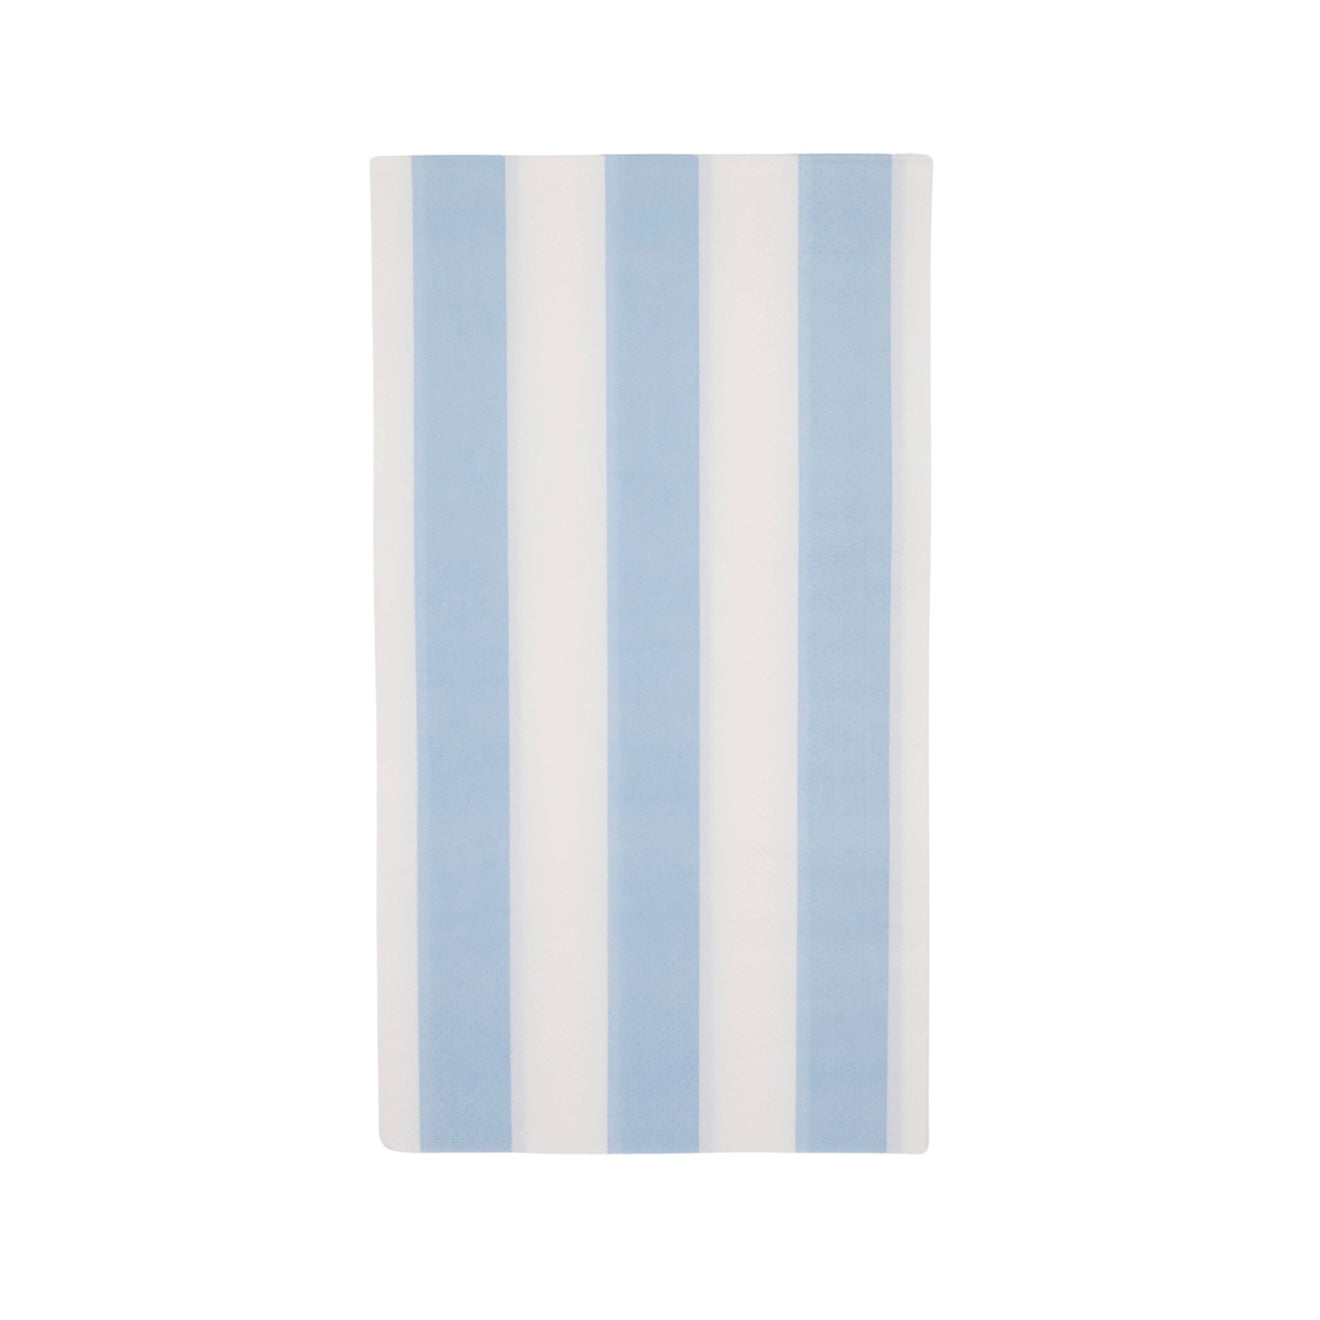 CABANA STRIPE PAPER GUEST TOWELS, LIGHT BLUE